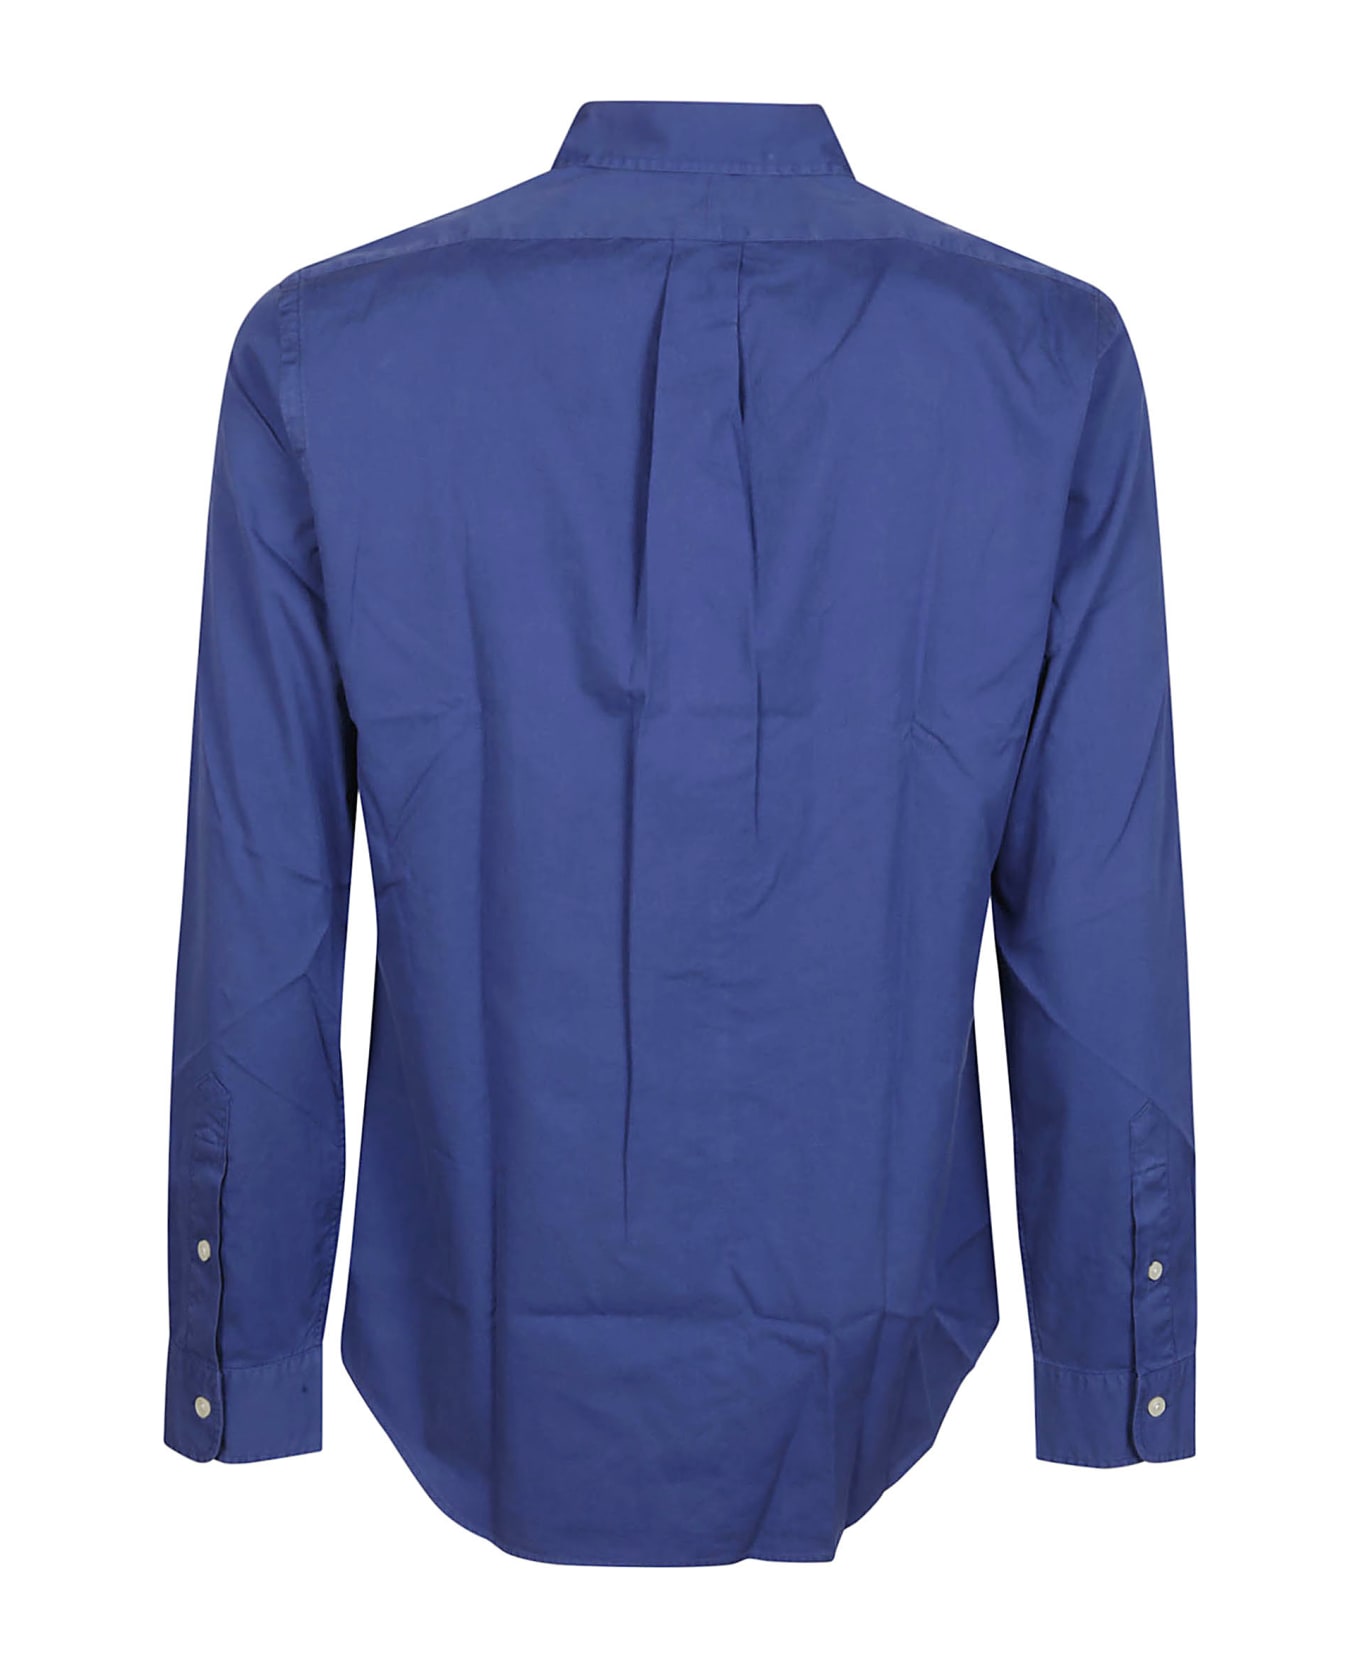 Polo Ralph Lauren Long Sleeve Sport Shirt - INCHIOSTRO シャツ